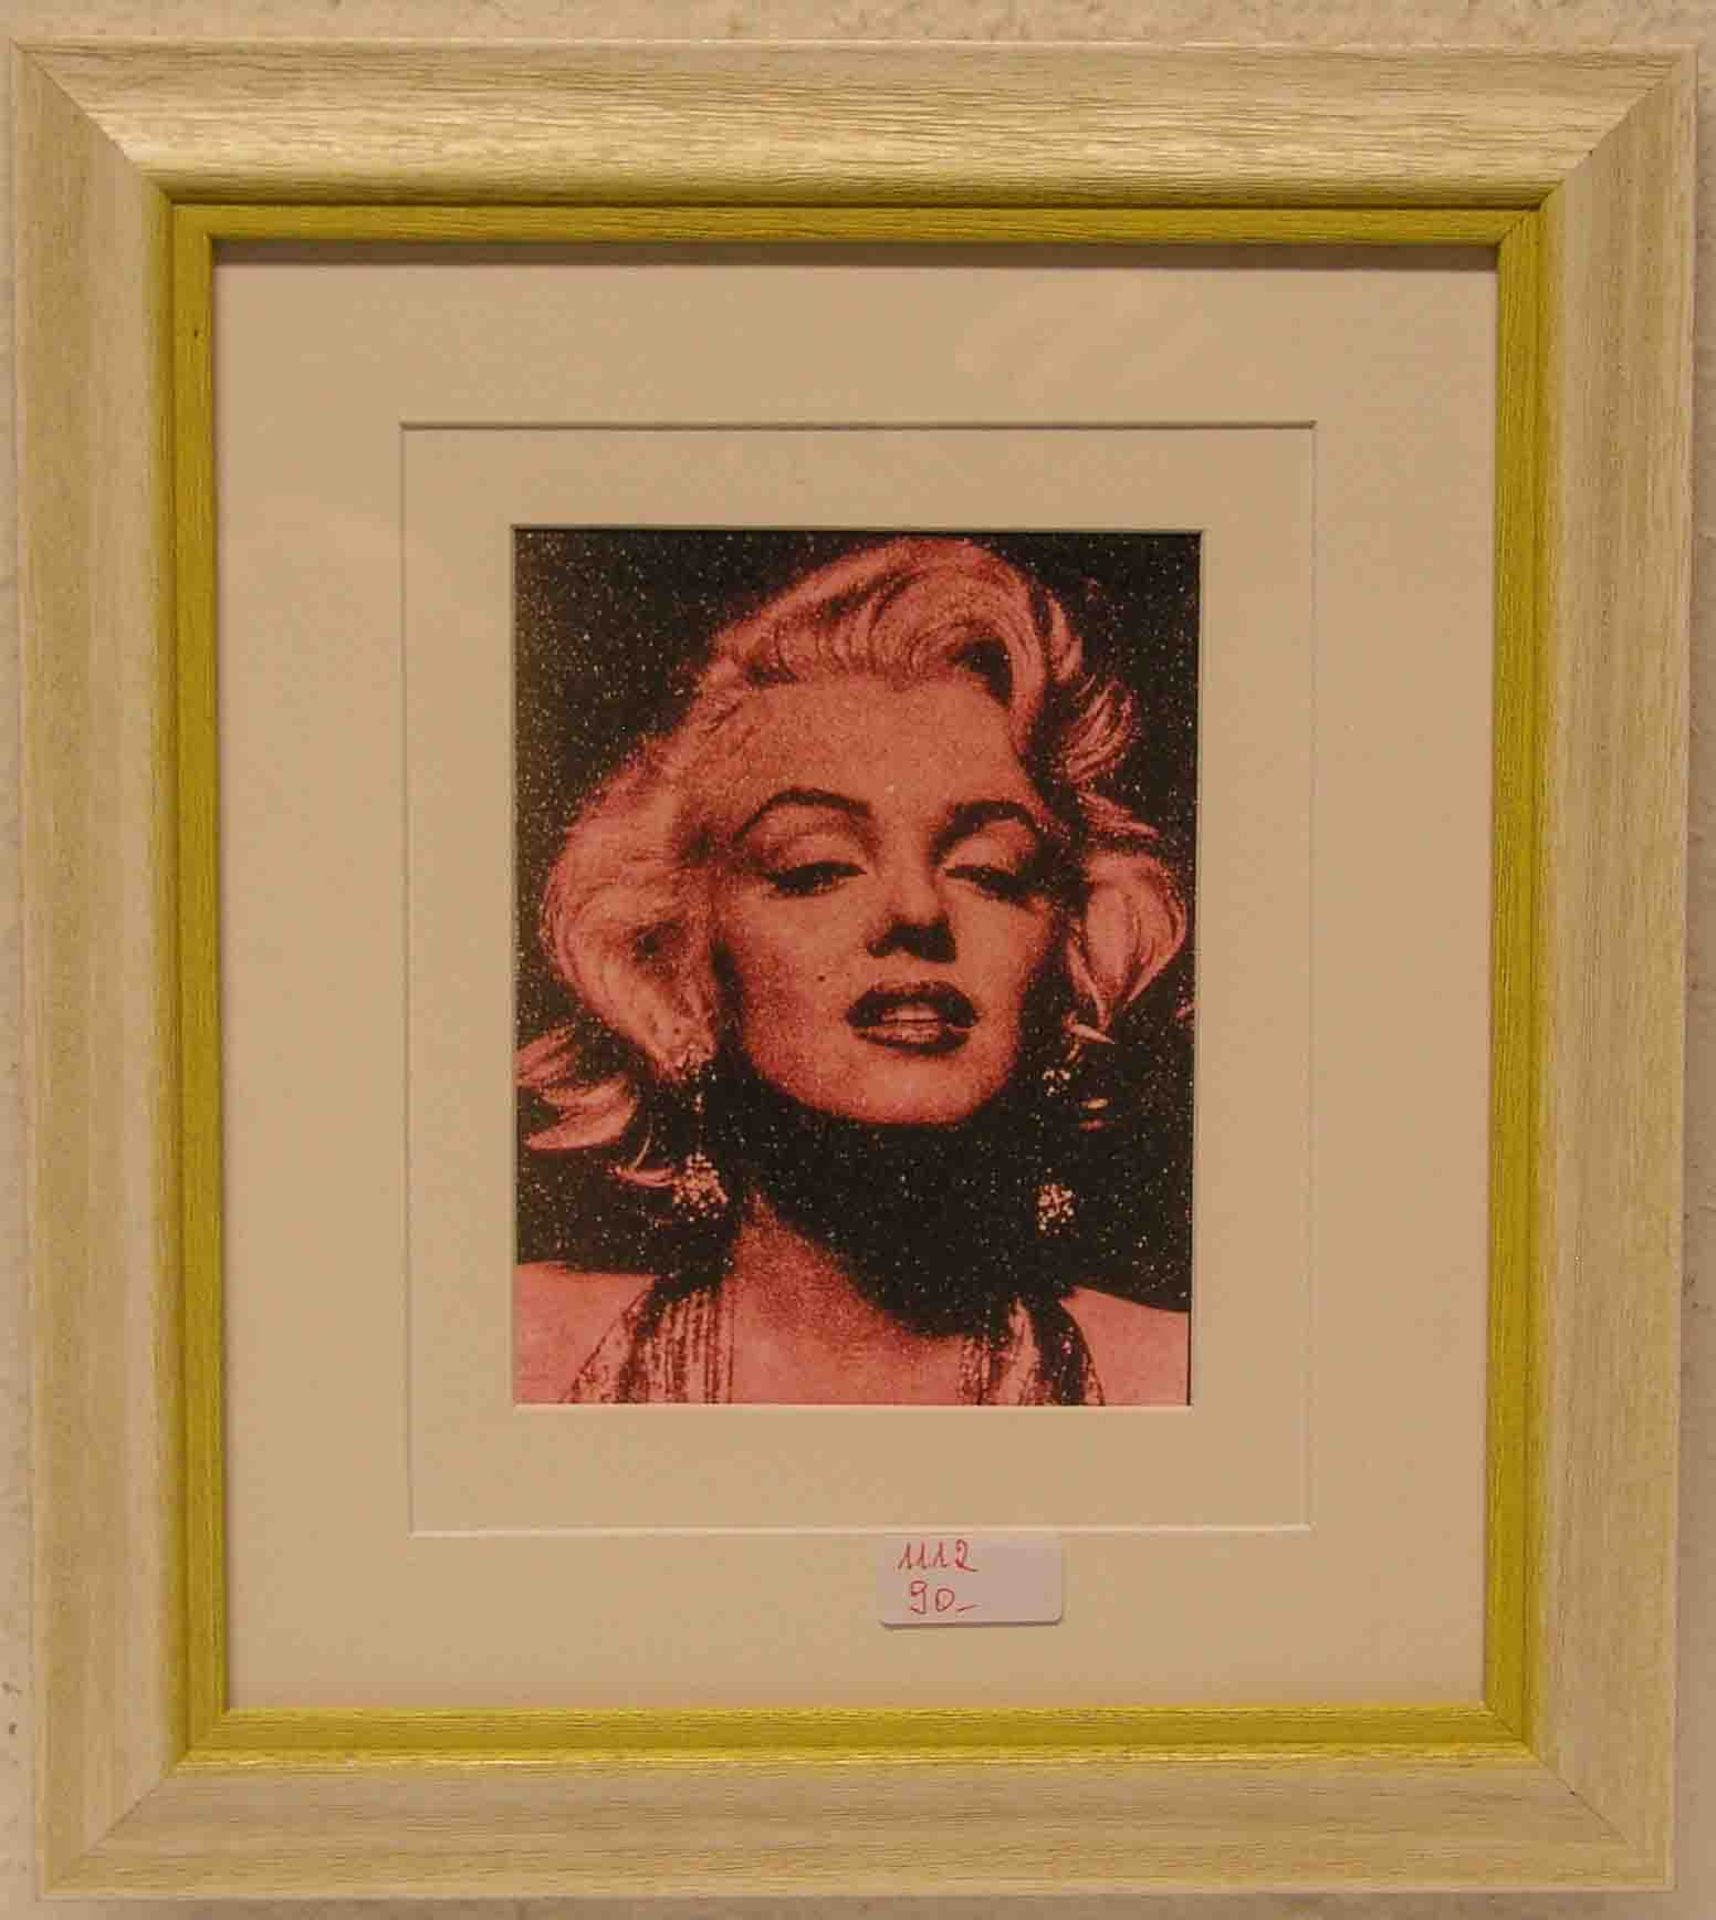 Russel, Young: "Marilyn" 2014. Farboffsetdruck, 35 x 32cm, Rahmen mit Glas.- - -20.17 % buyer's